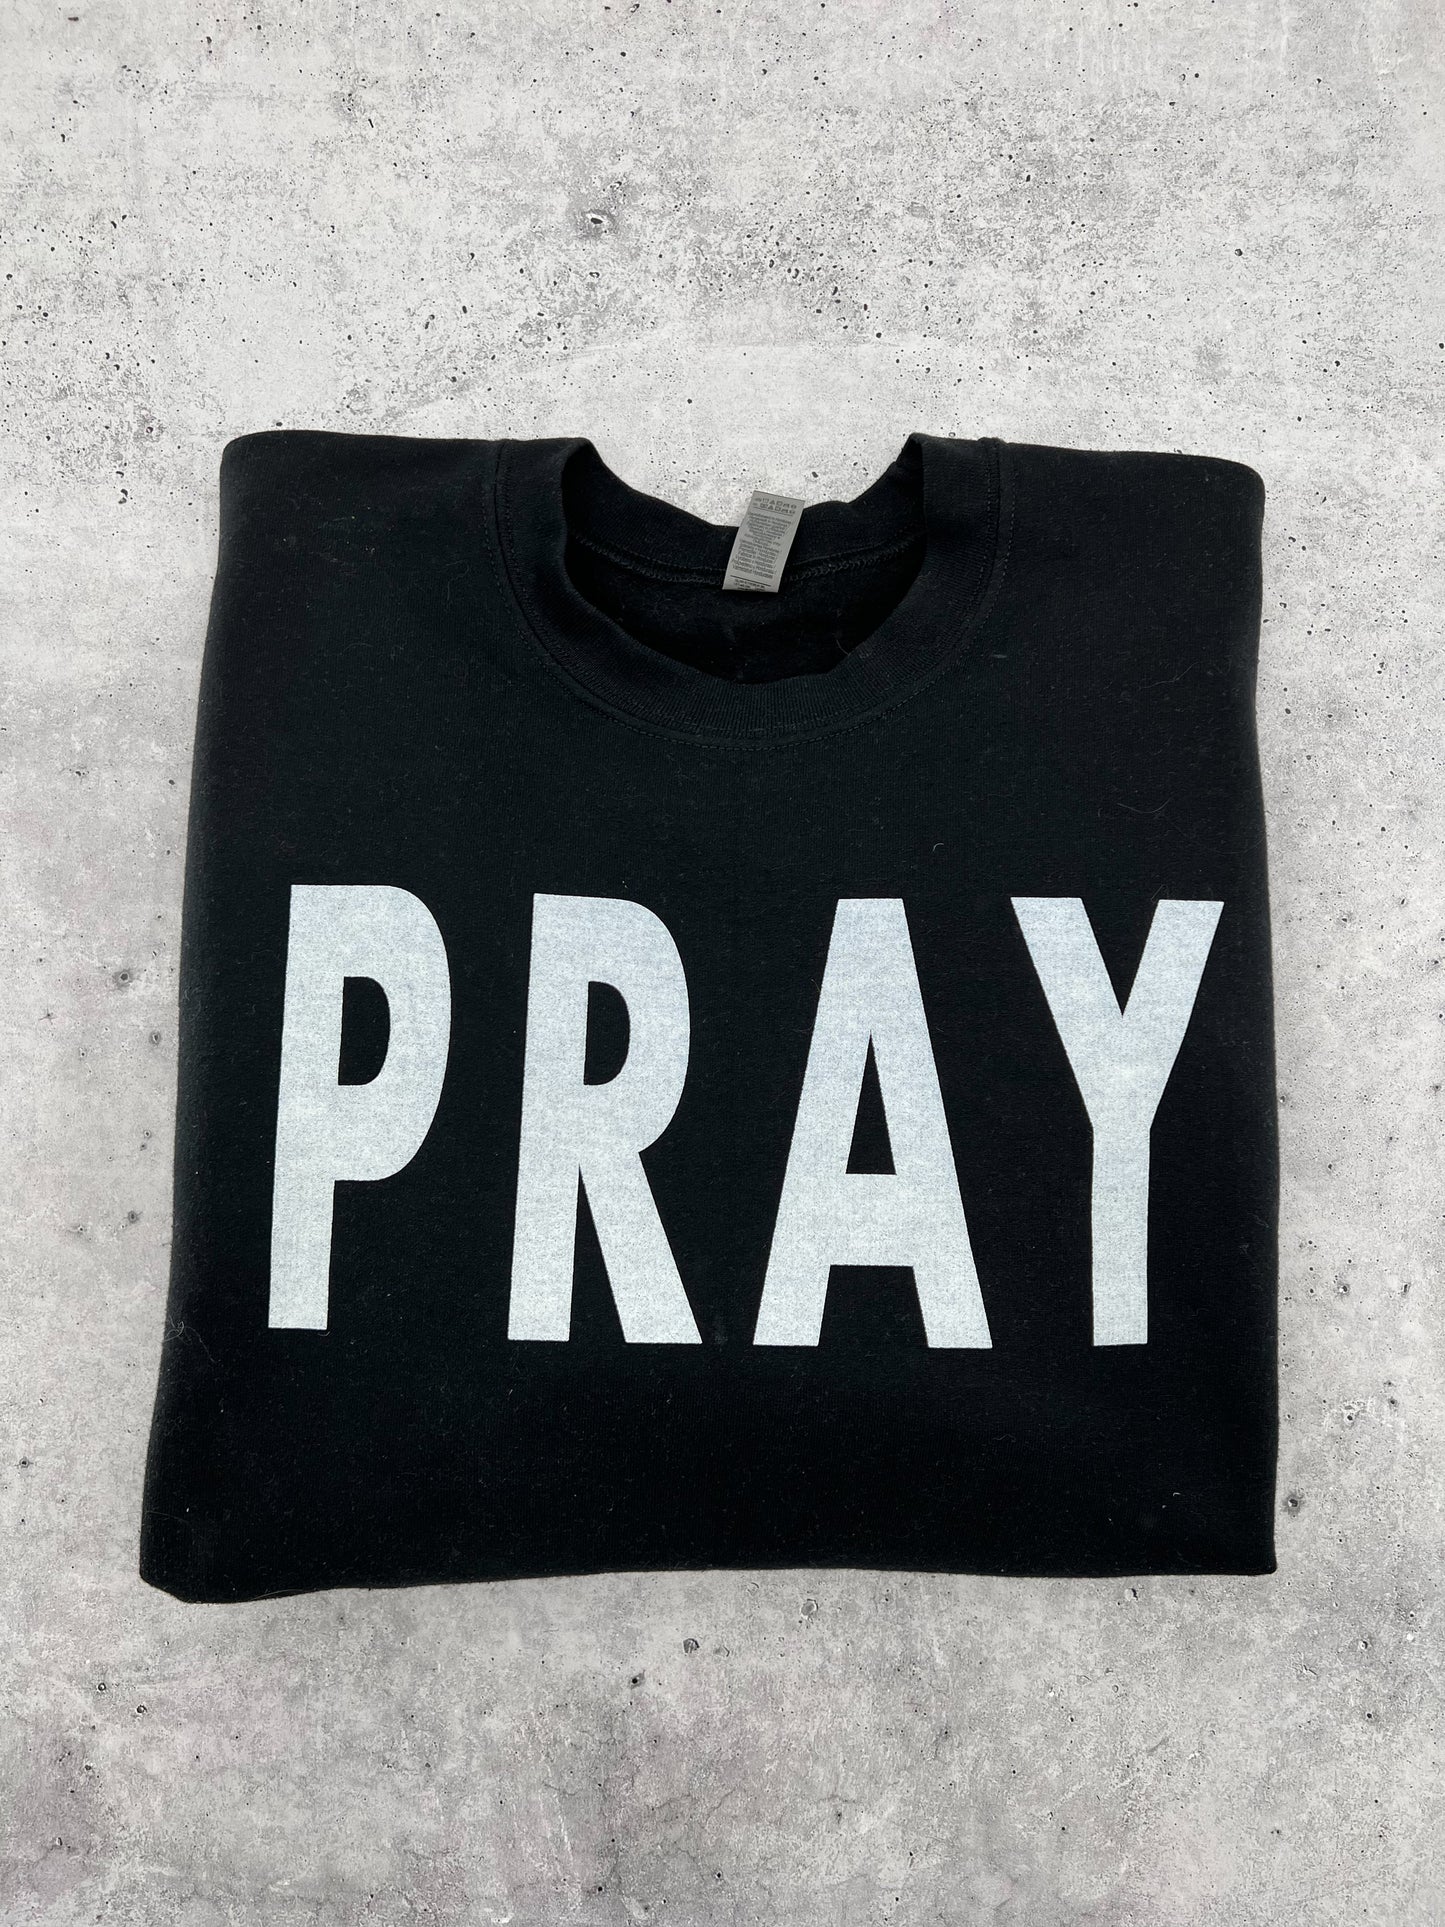 PRAY Sweatshirt